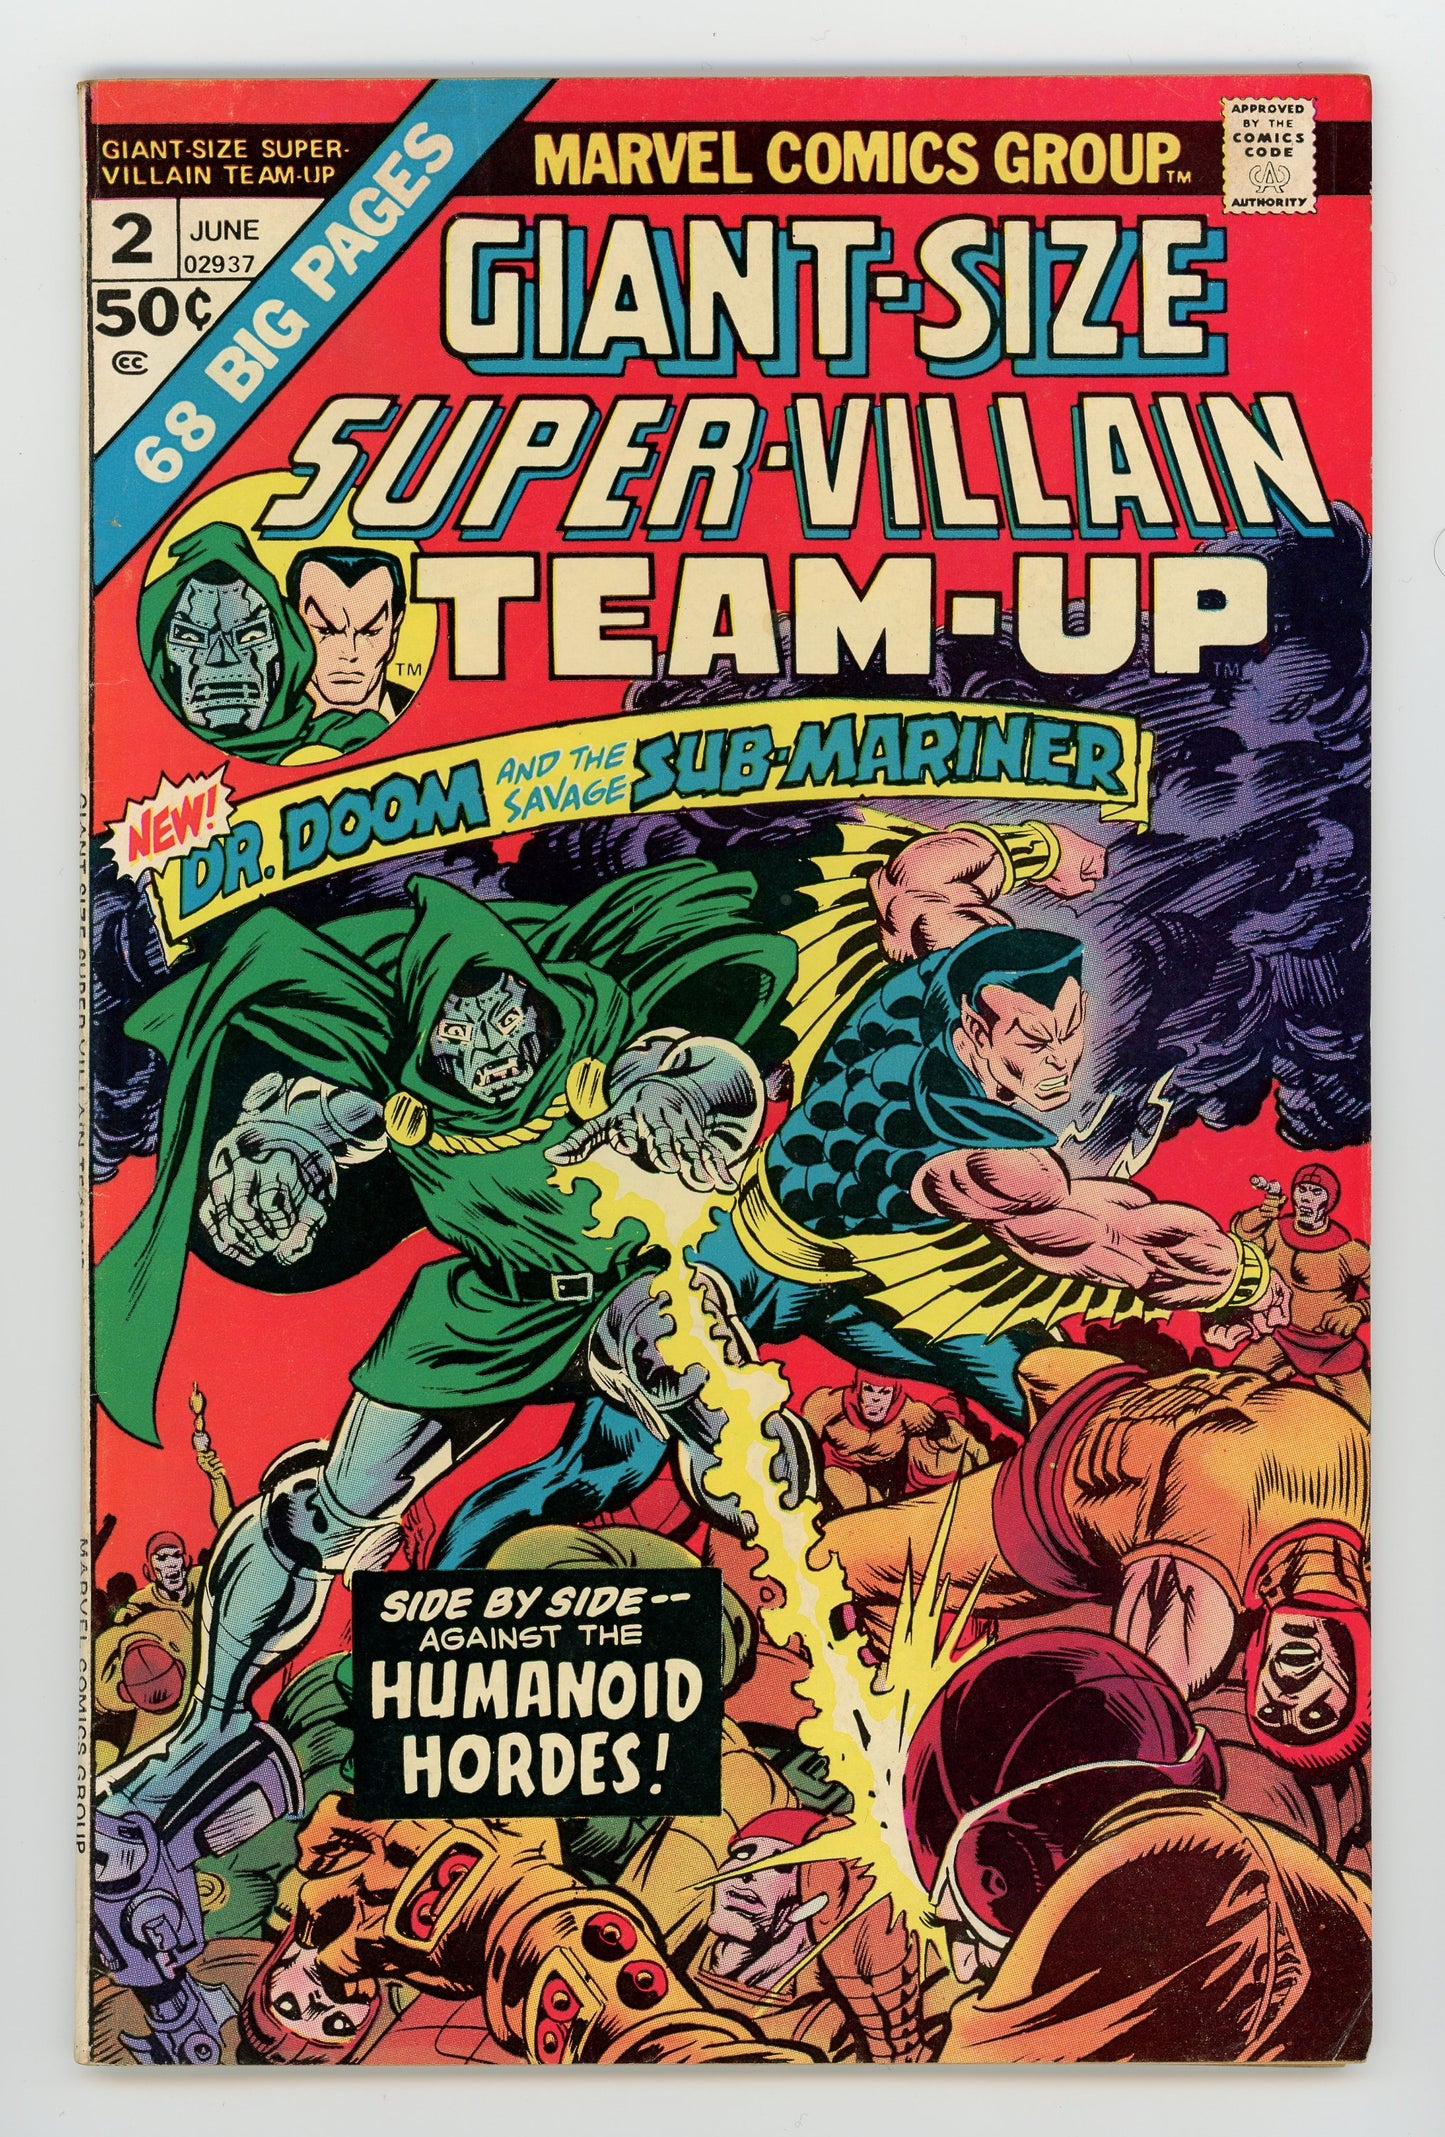 GIANT-SIZE SUPER-VILLAIN TEAM-UP #2 (1975)